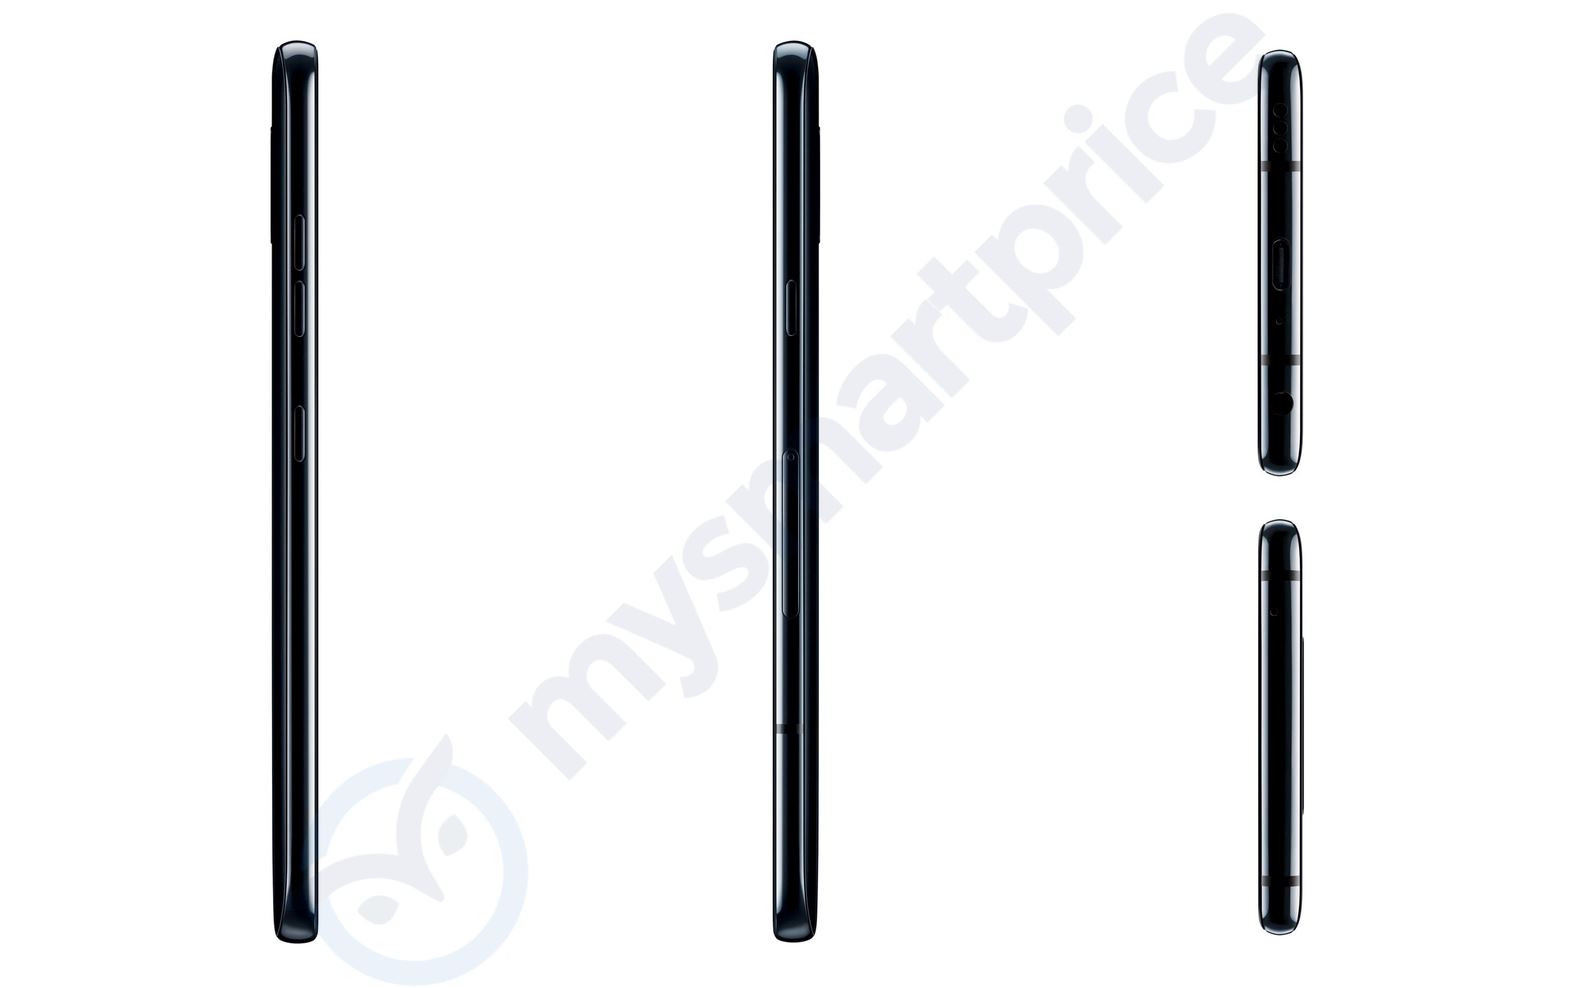 LG V40 ThinQ COPIA iPhone X Huawei 2